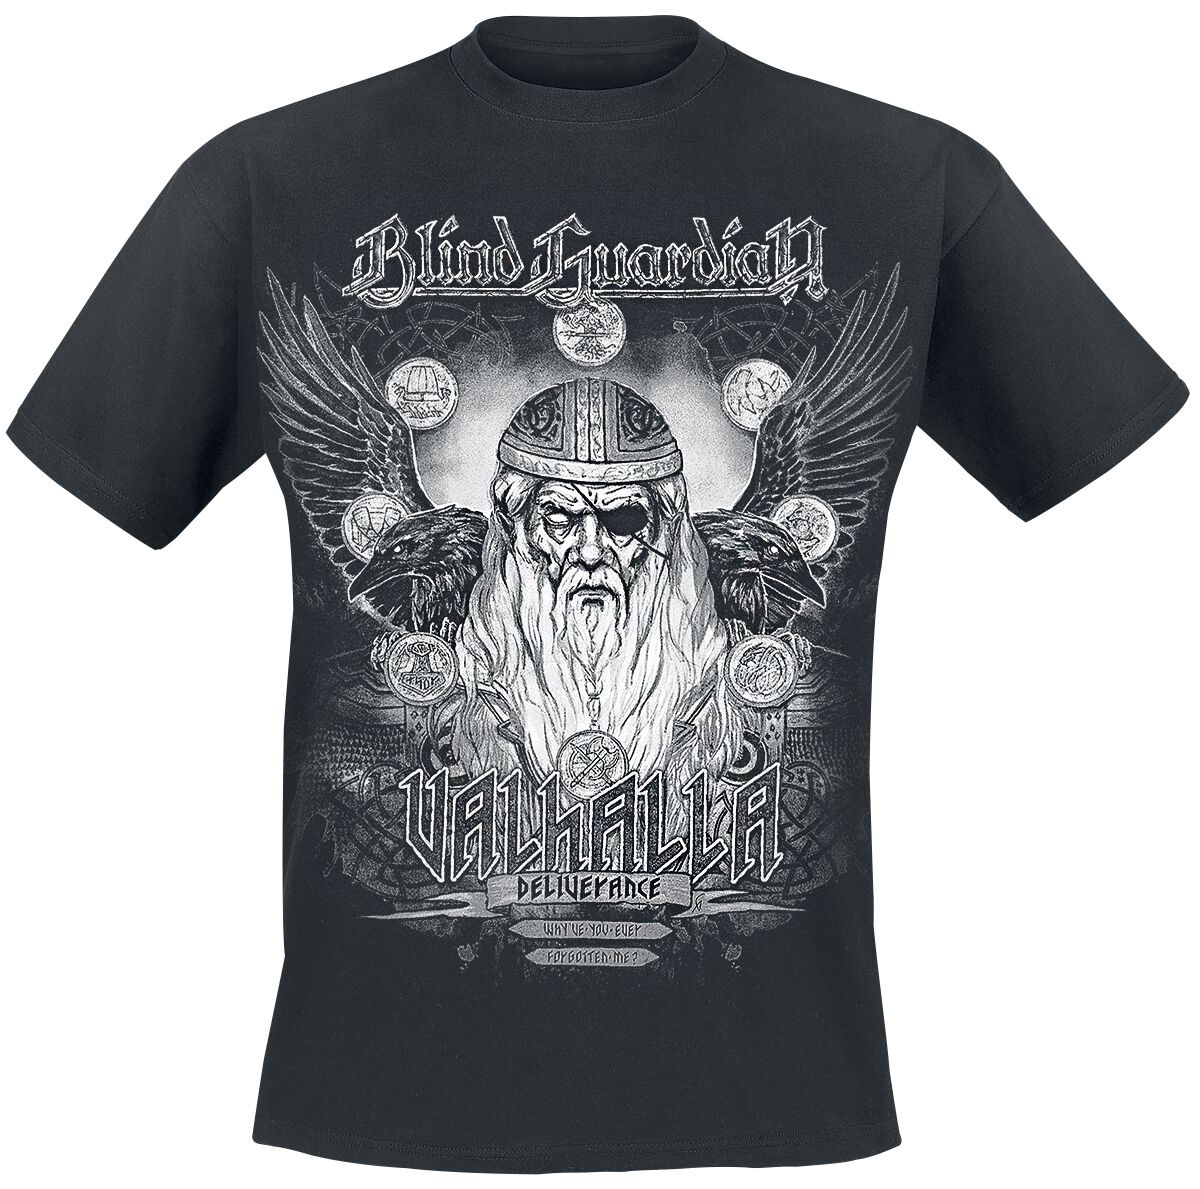 Blind Guardian Valhalla - Deliverance T-Shirt schwarz in 4XL